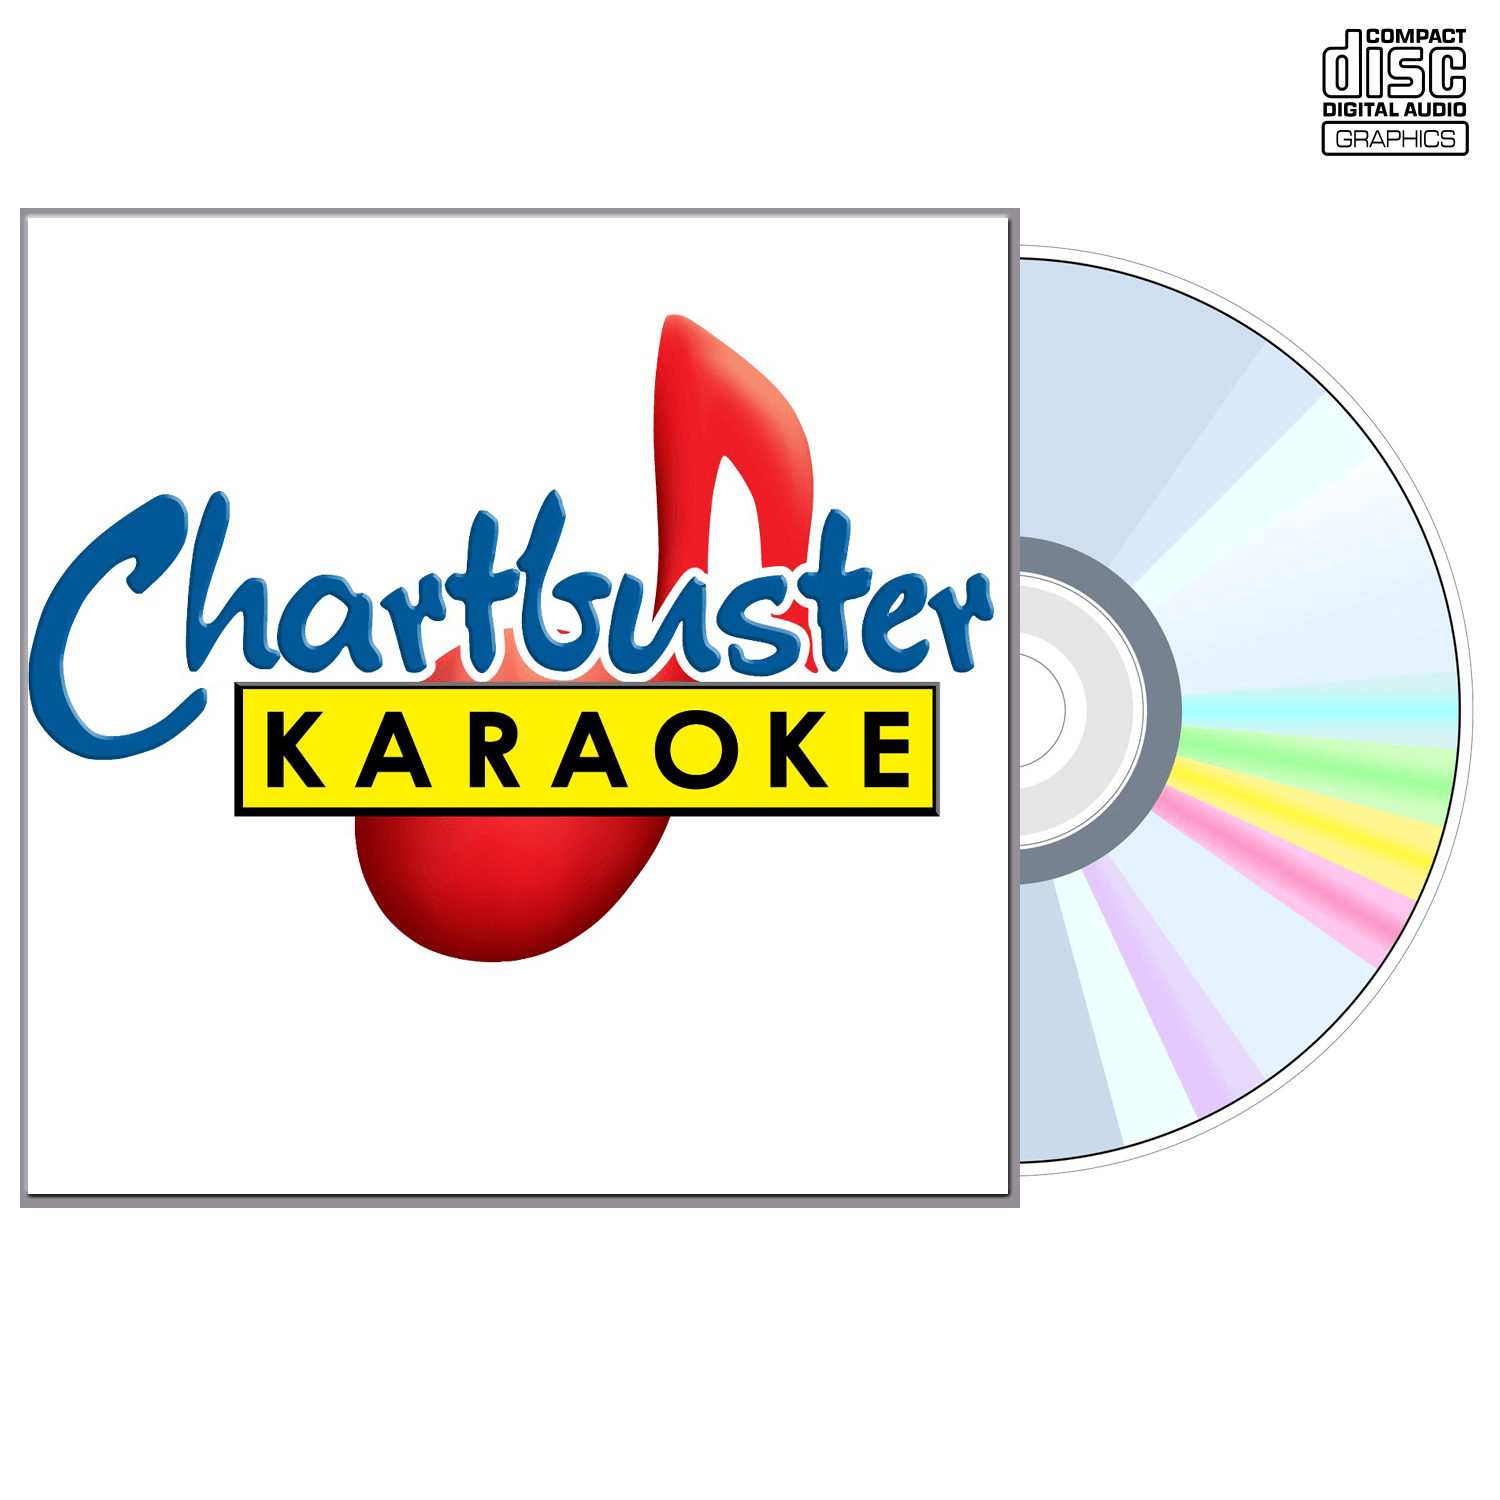 Country Mix Vol 03 - CD+G - Chartbuster Karaoke - Karaoke Home Entertainment